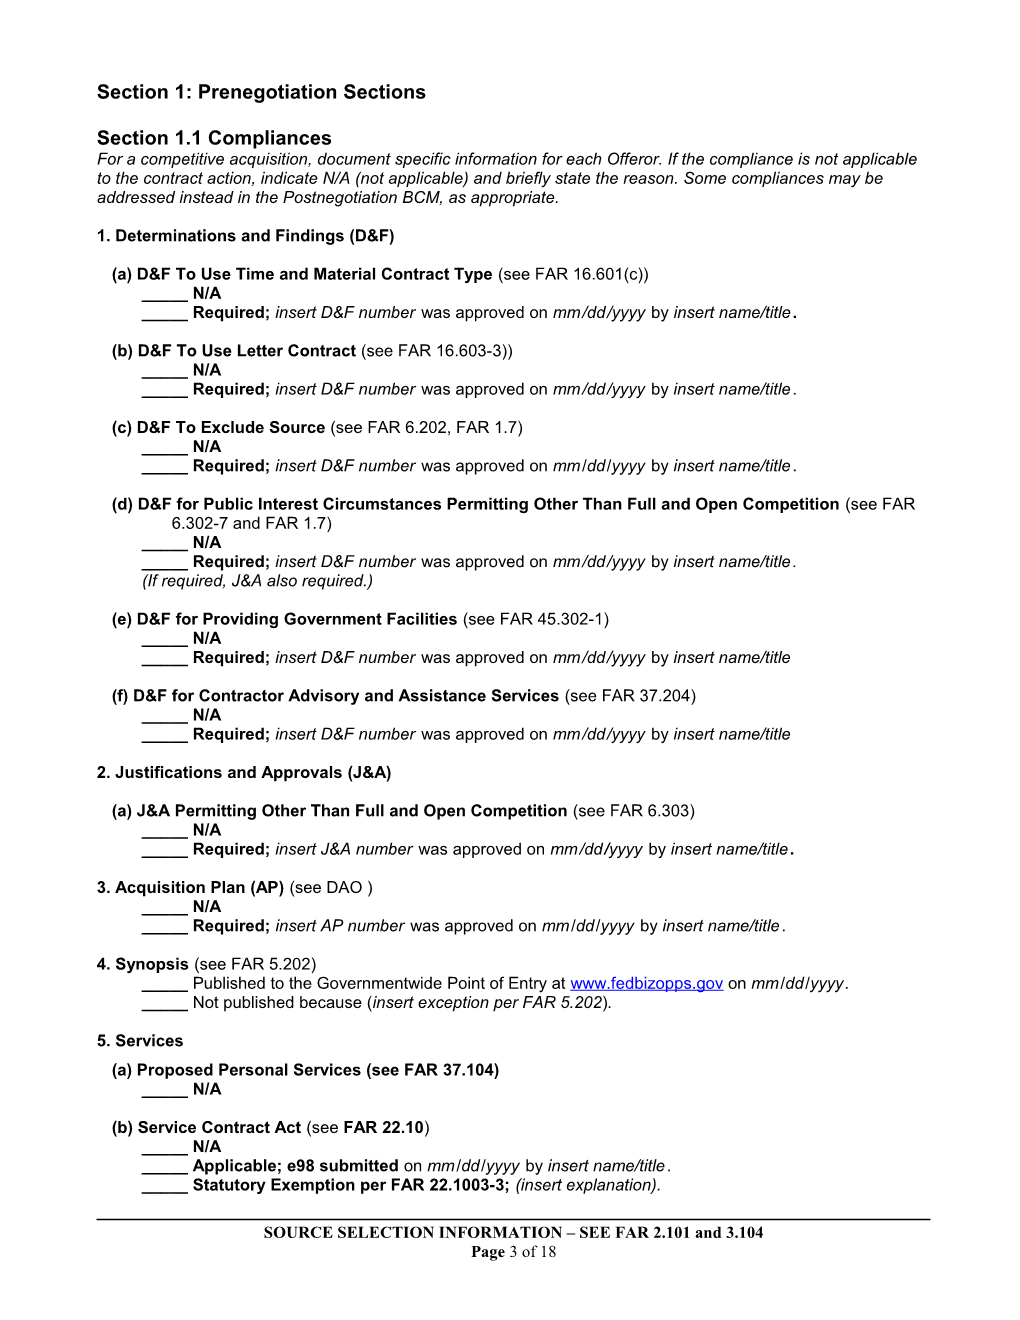 Business Clearance Memorandum -- Form (>$500K)